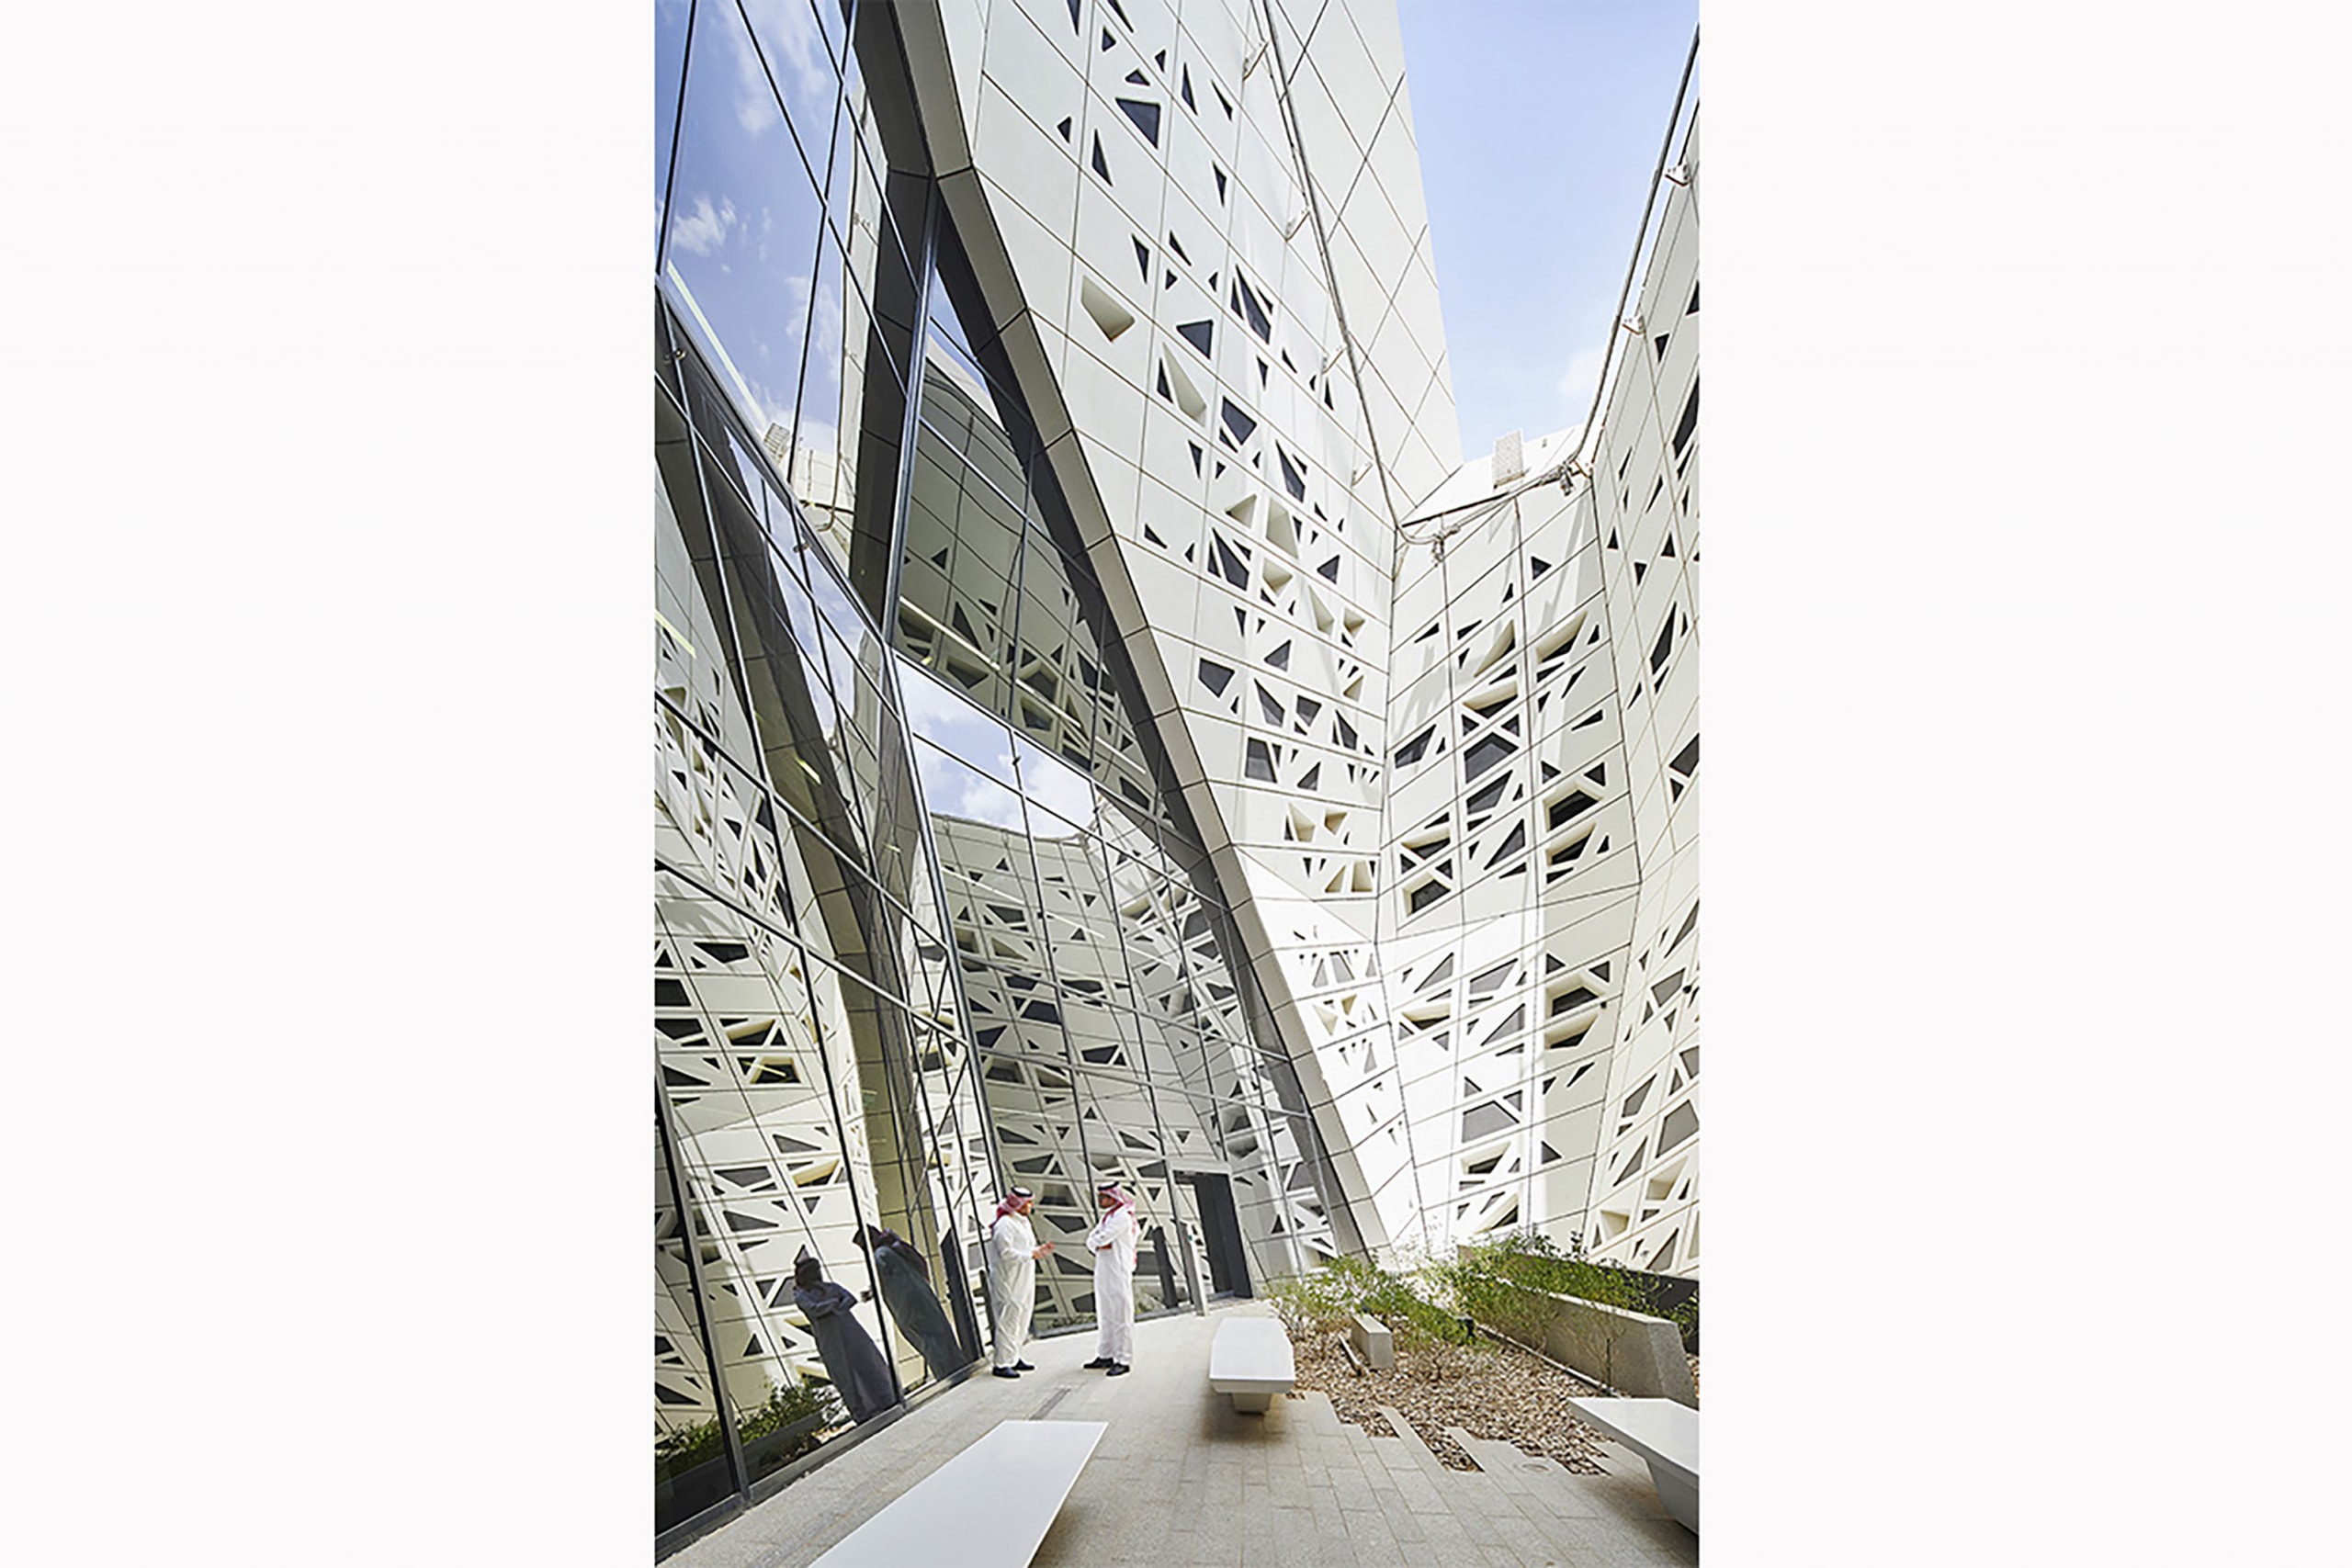 Zaha Hadid Architects Honeycomb Structure King Abdullah Petroleum Studies and Research Center Riyadh Saudi Arabia